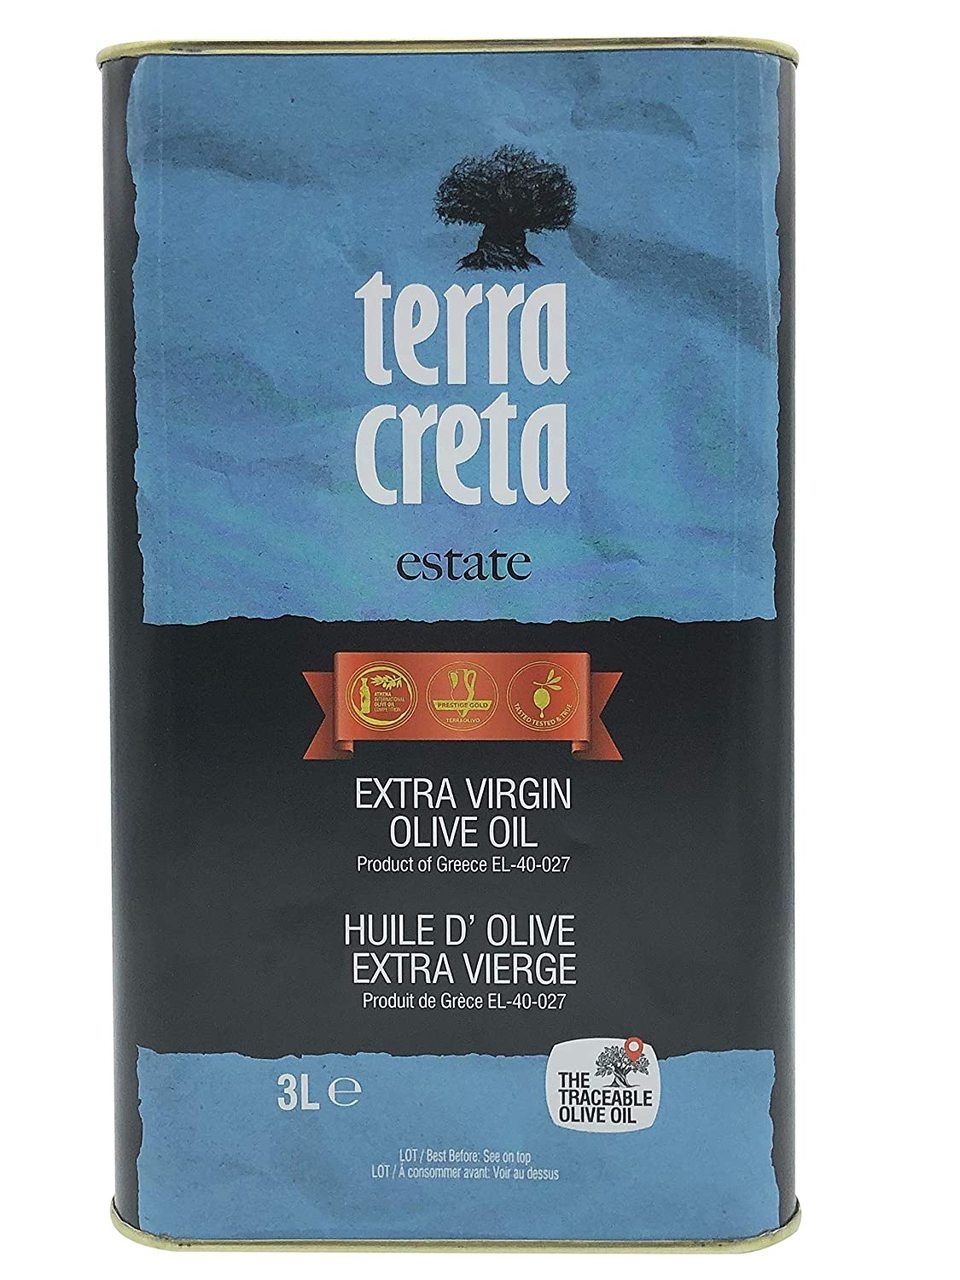 Agora Products - Enjoy Terra Creta high quality Estate